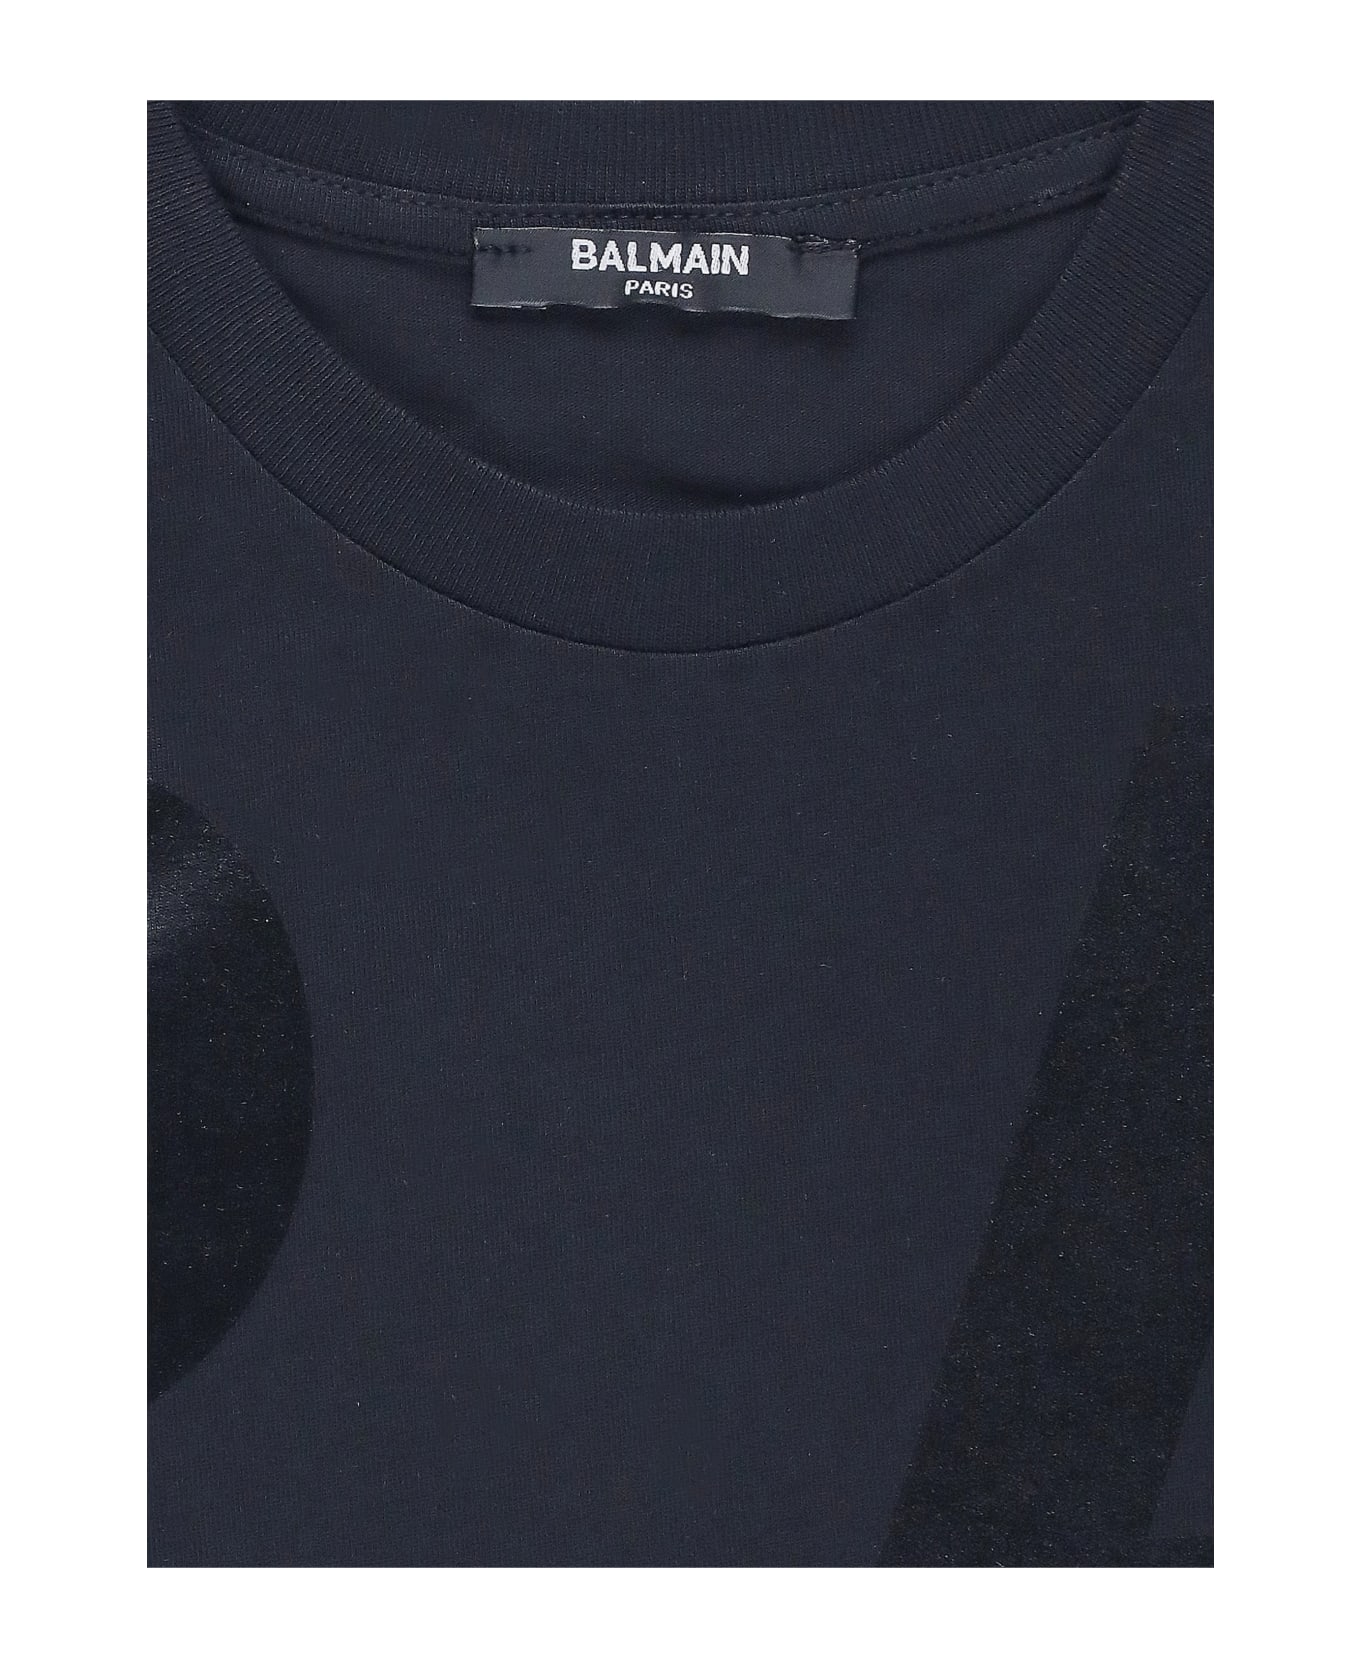 Balmain T-shirt With Logo - Black